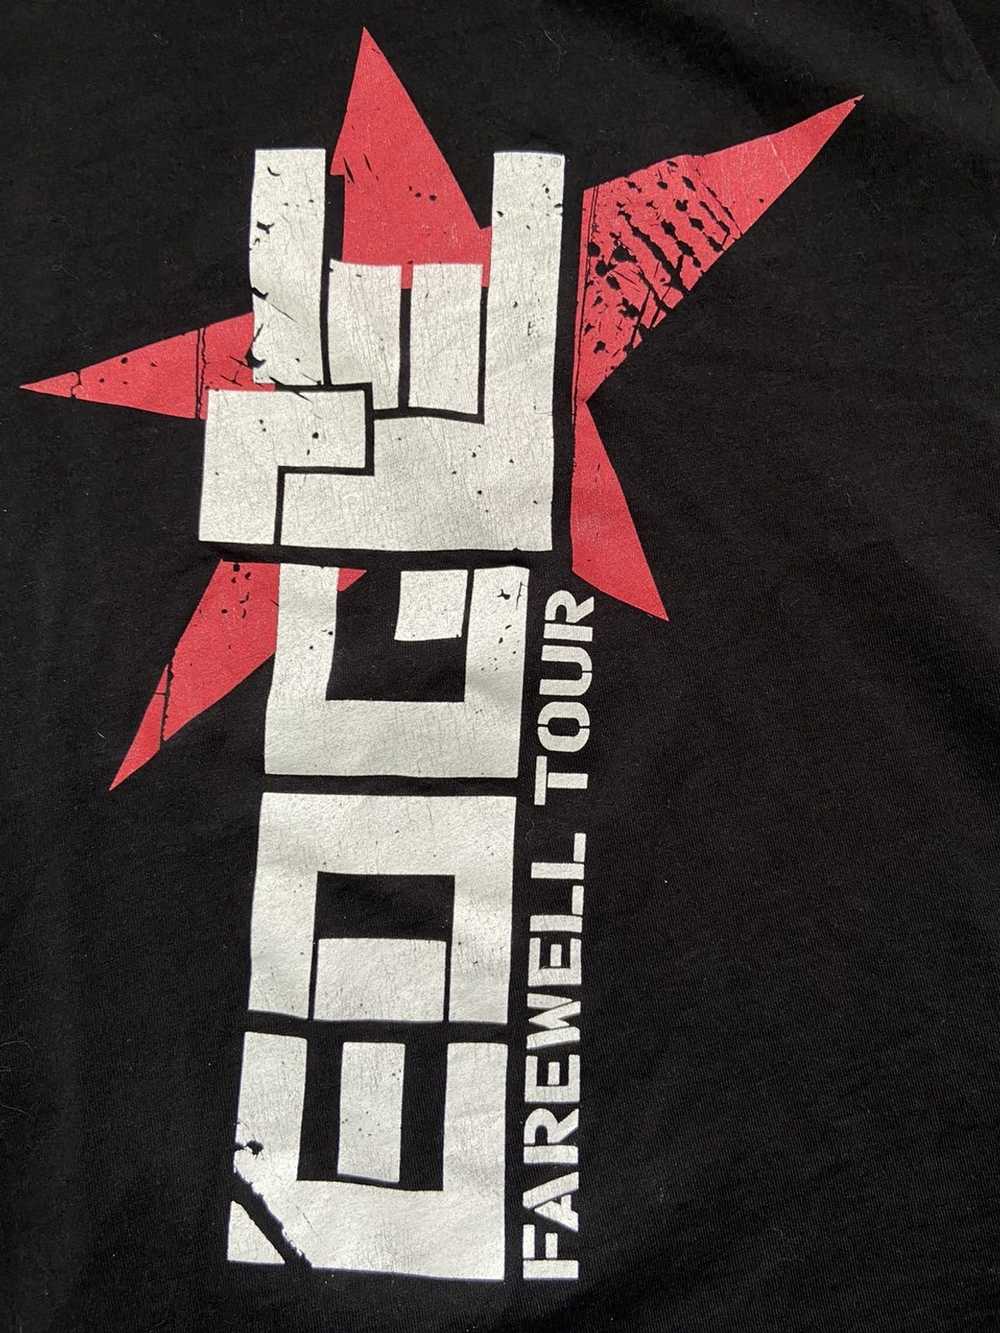 Authentic × Wwe WWE Authentic Edge T-shirt - image 5